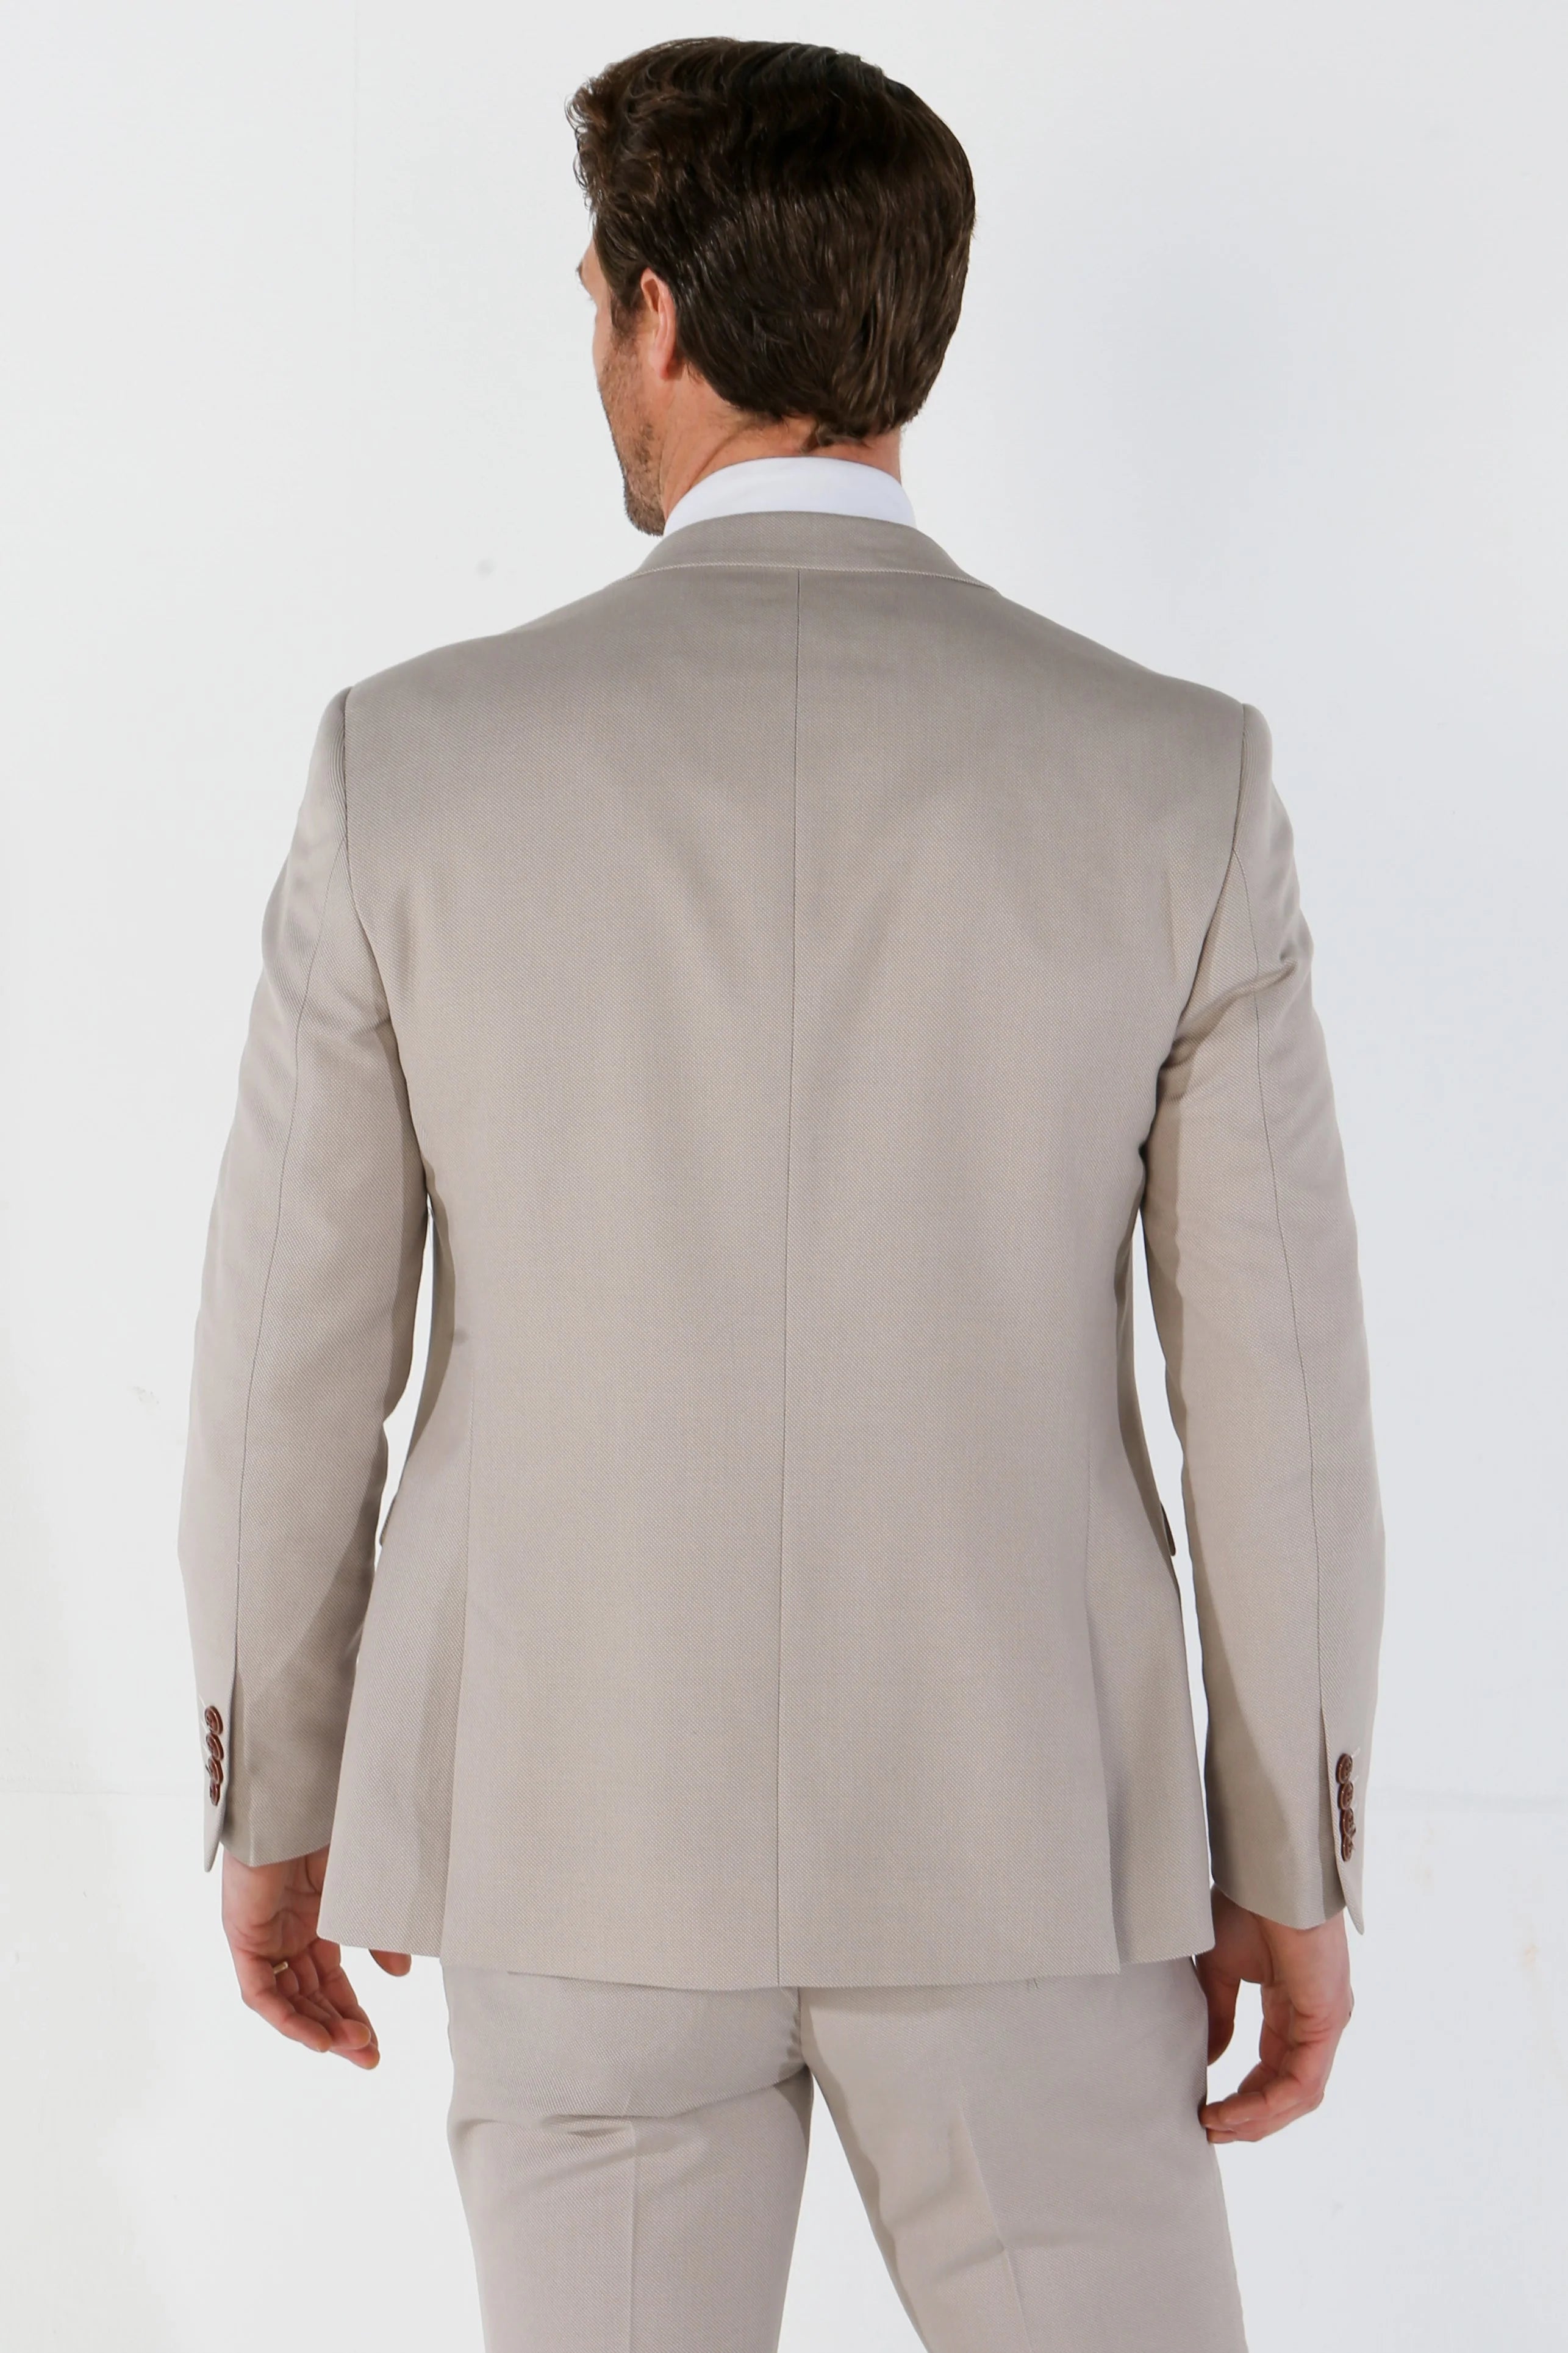 Mayfair - Men's 3 Piece Beige Birdseye Wedding Suit